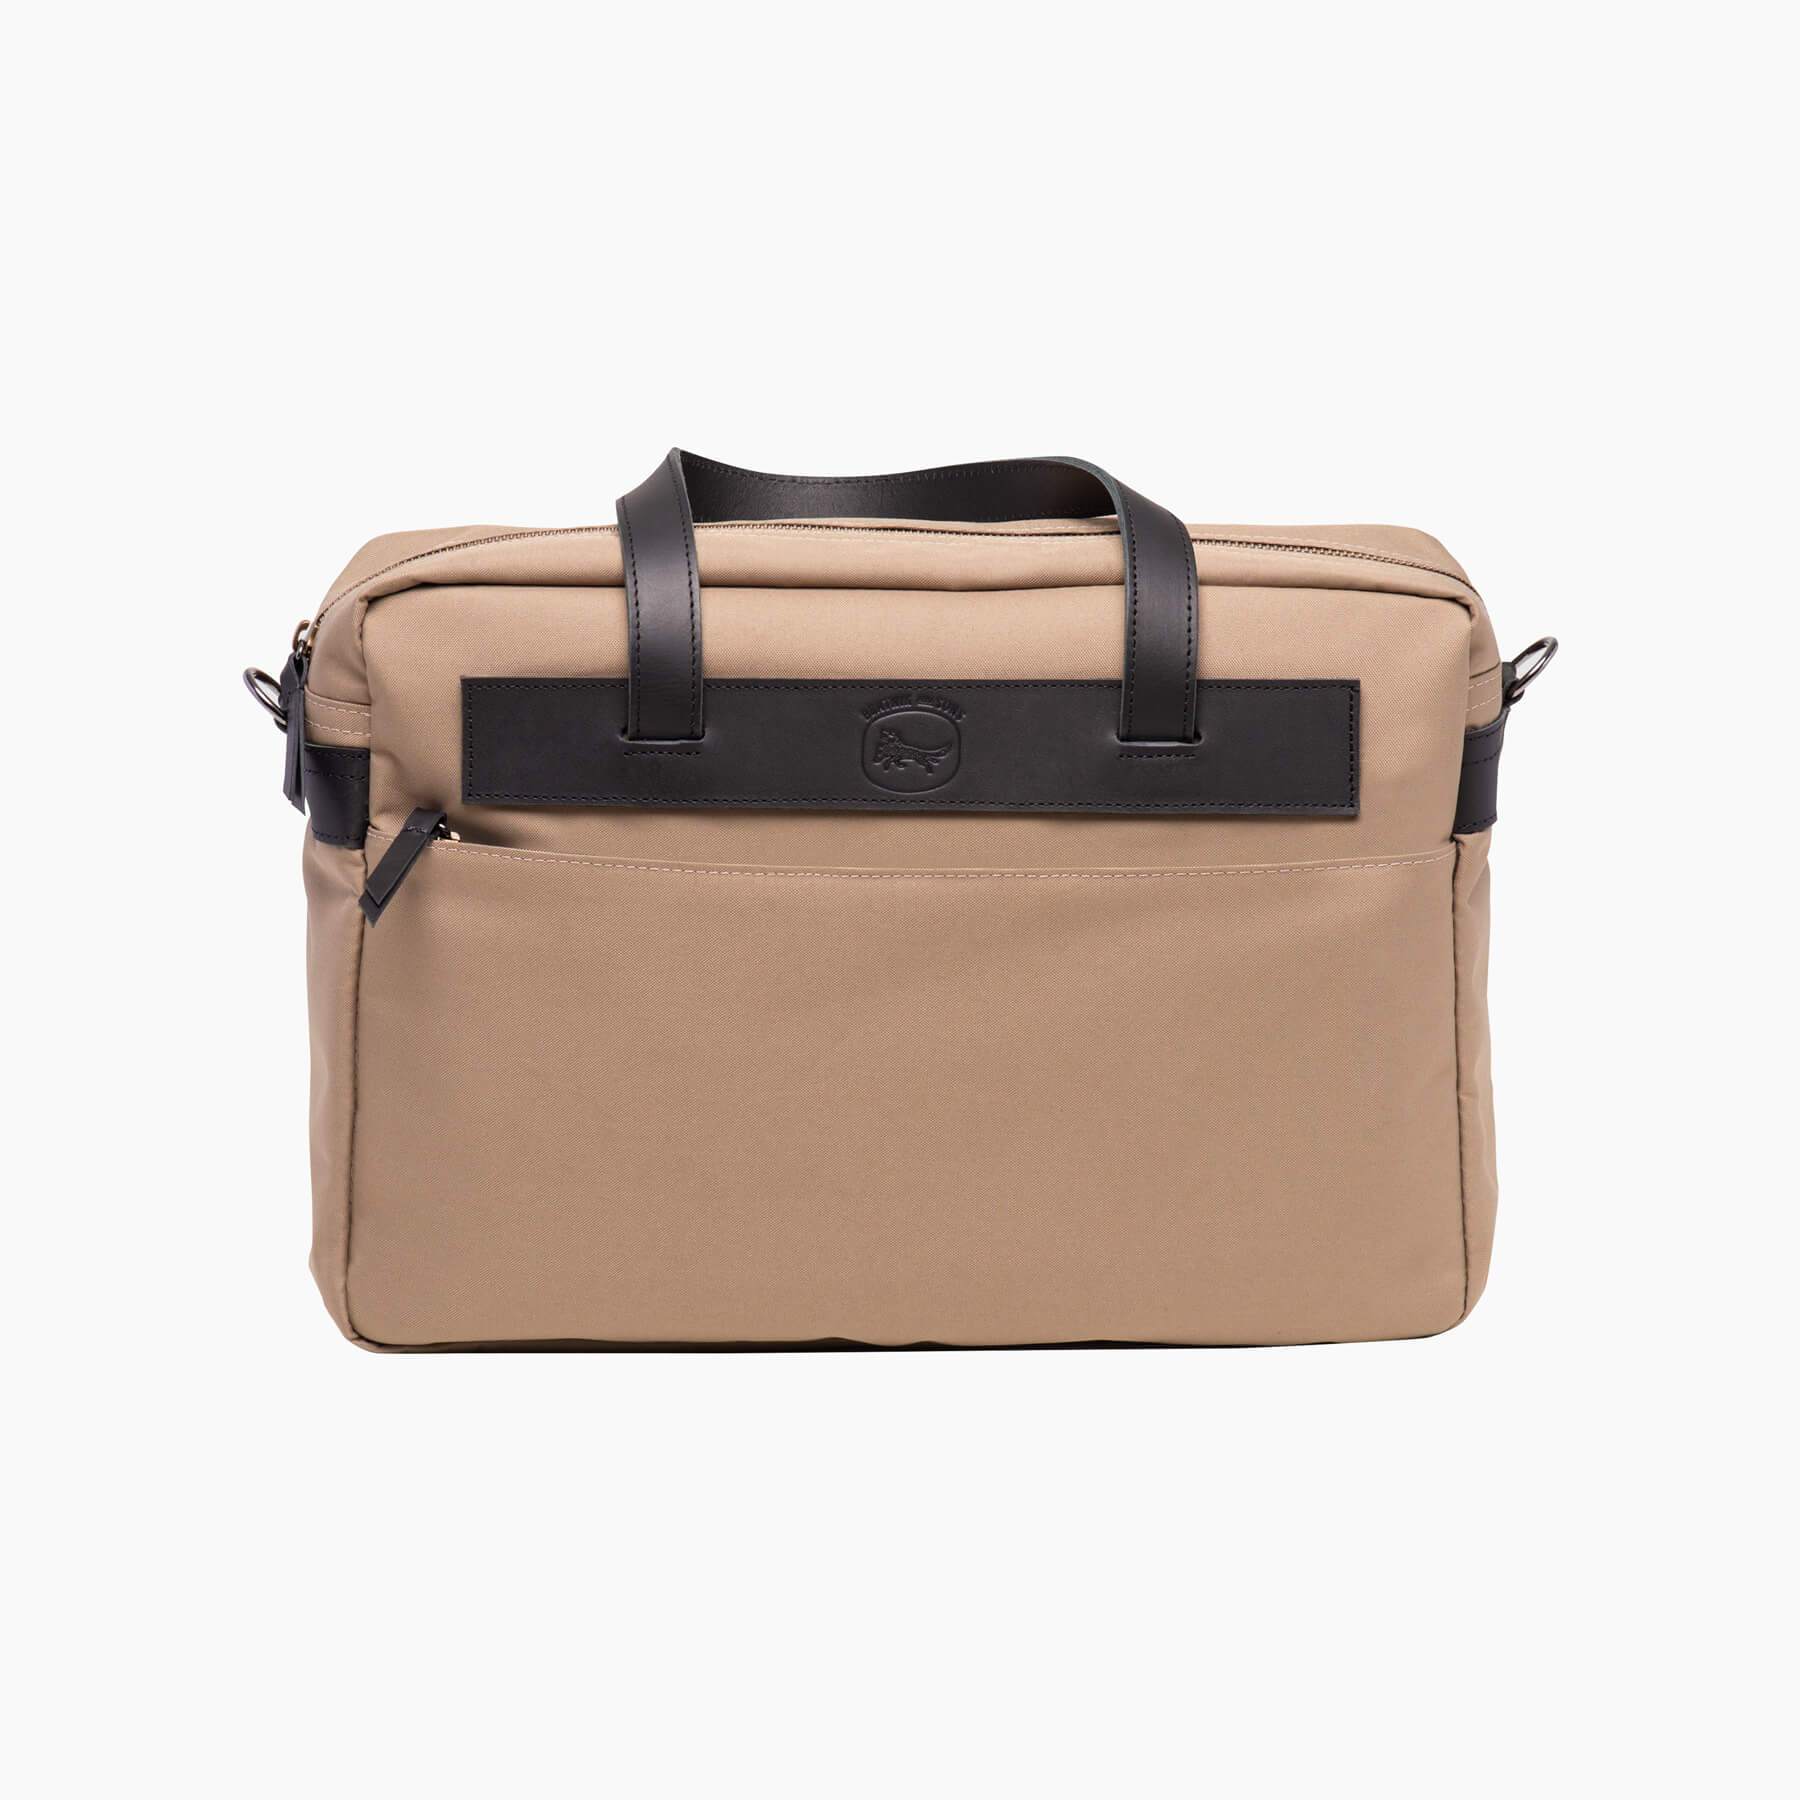 Beatnik & Sons Leather handbags Khaki the Chet briefcase